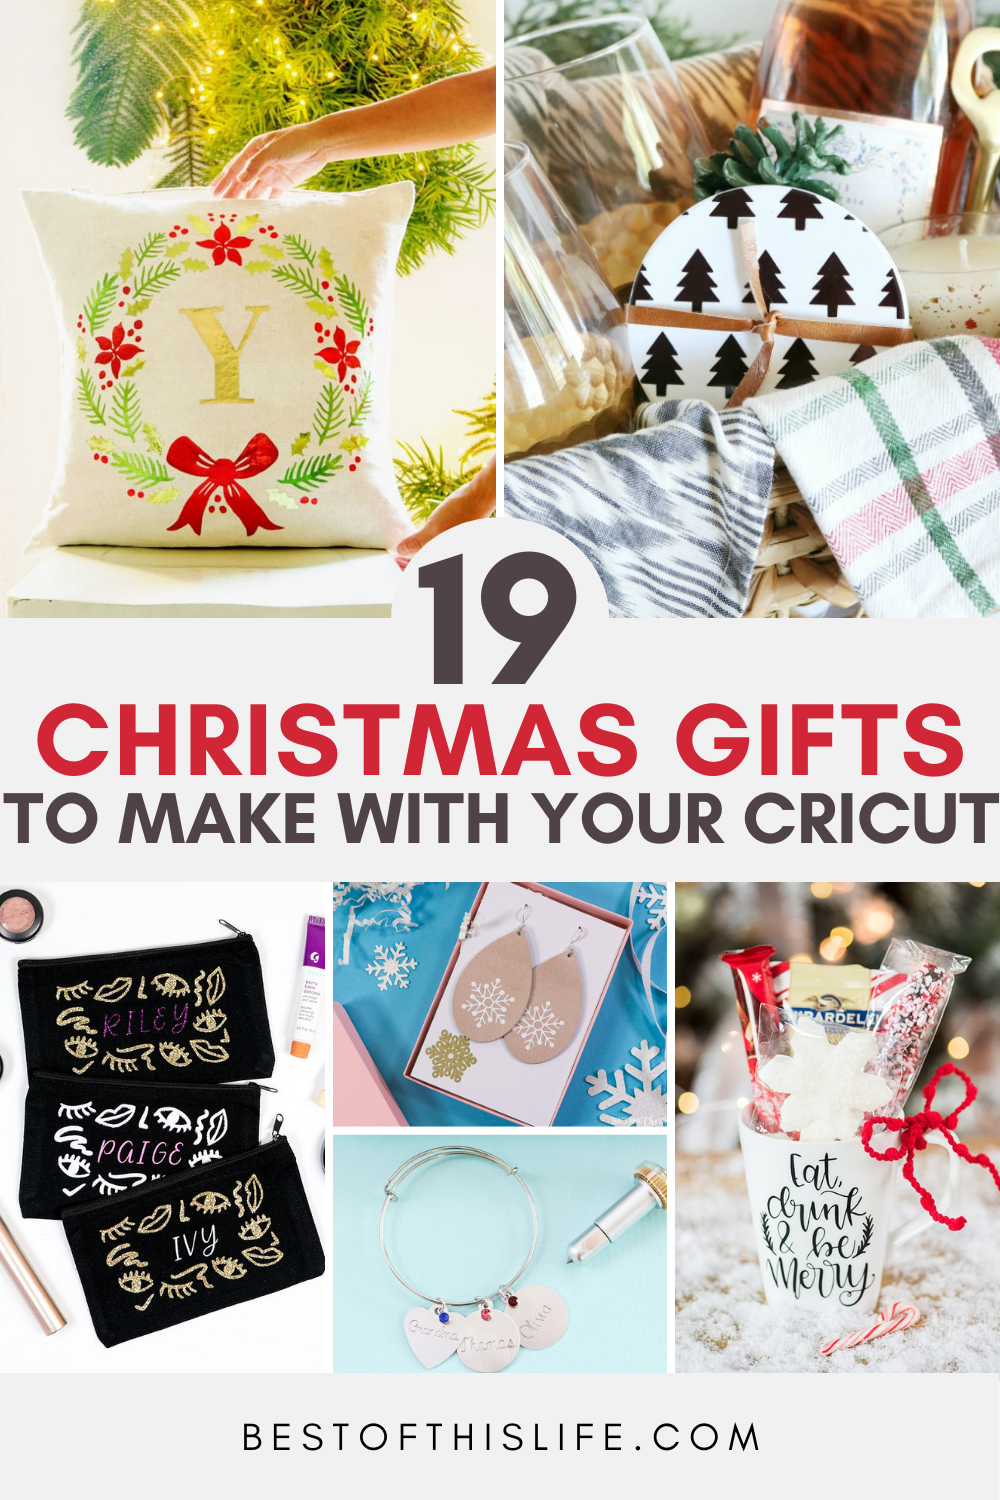 25 Wonderful Personalized Christmas Gift Ideas Using Your Cricut